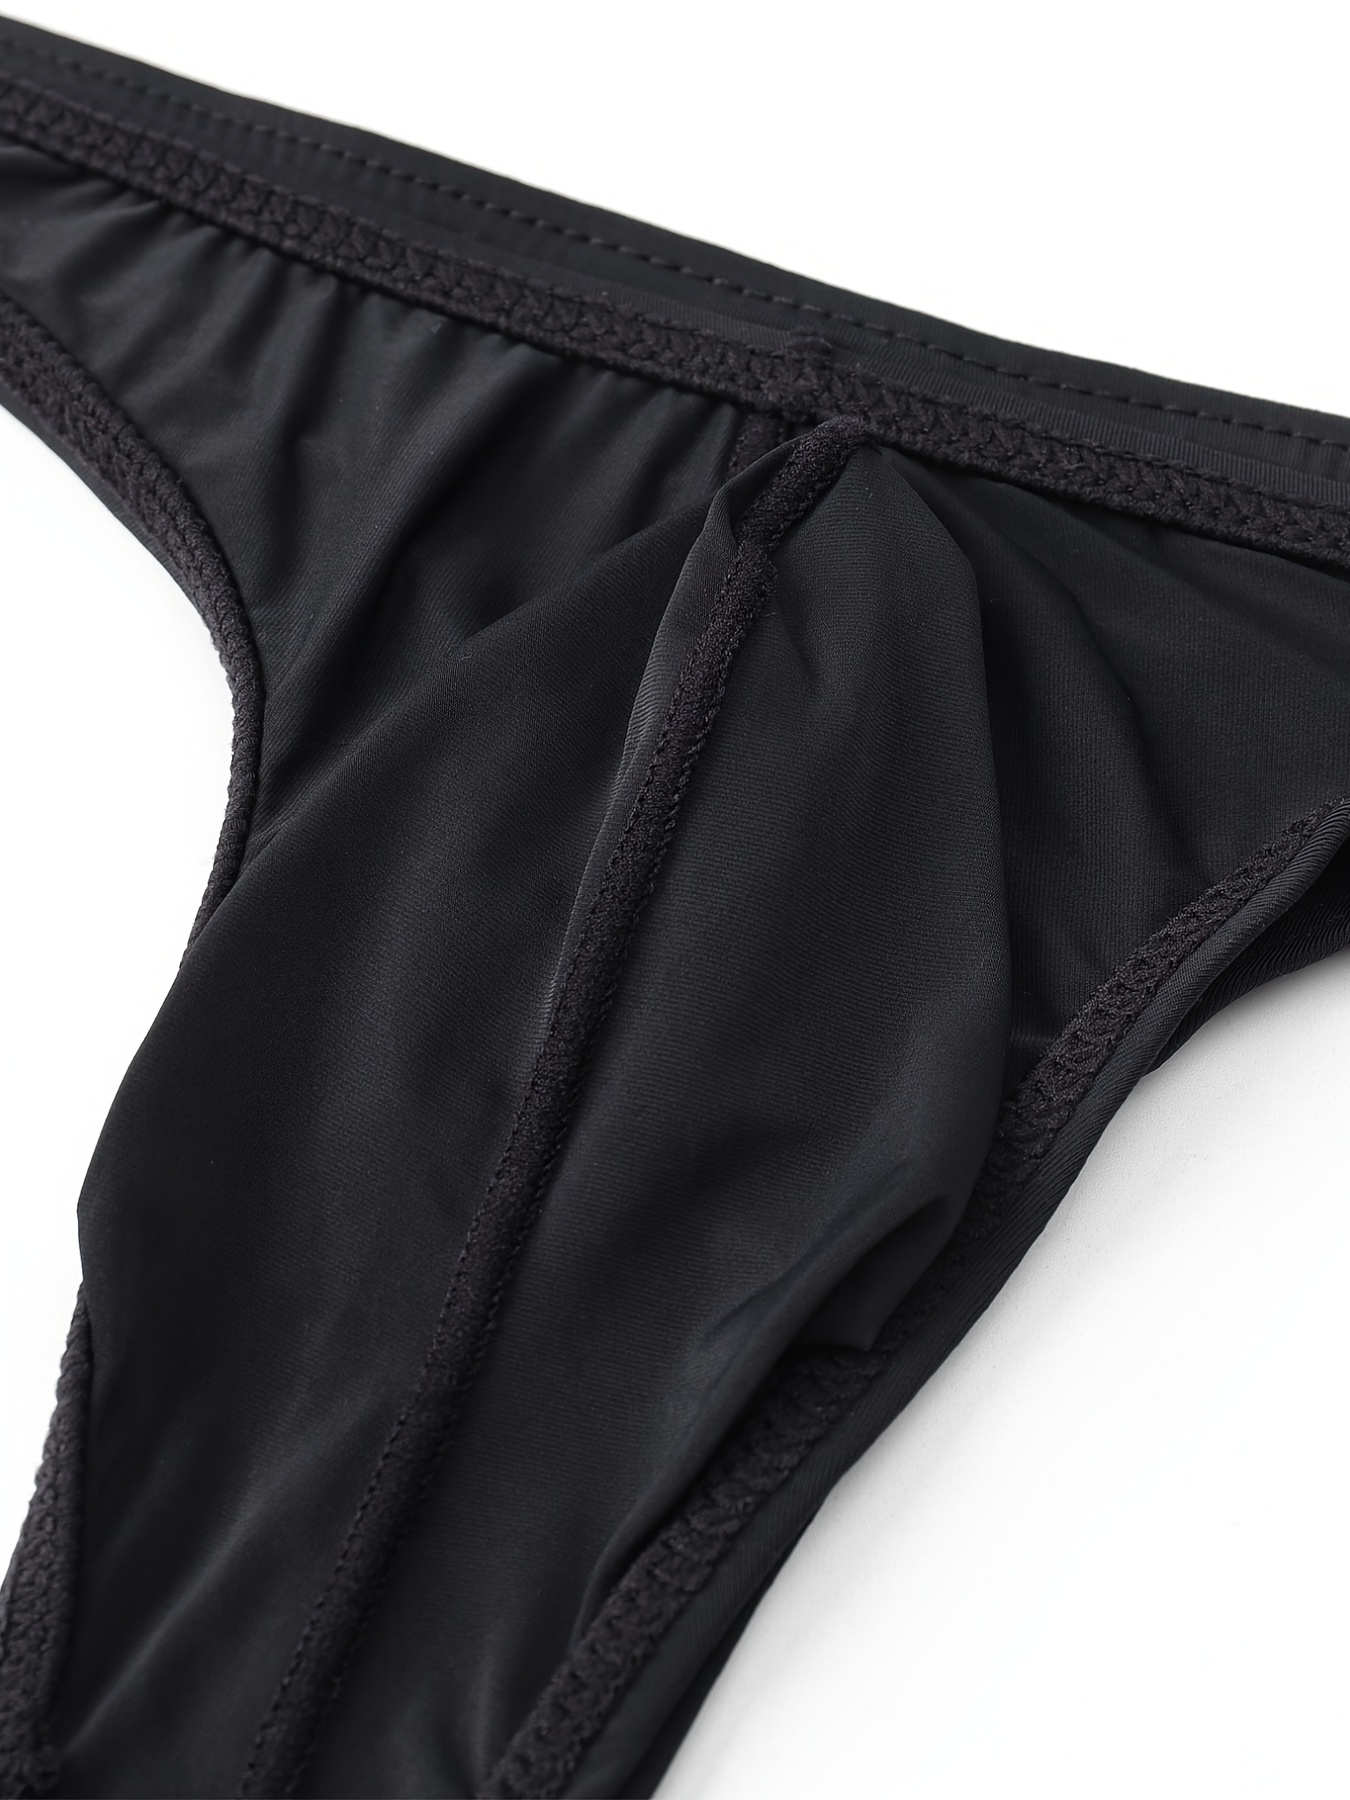 Buy Mens Ice Silk Elephant Nose Trunk Brief Underwear, Black, XX-Large at